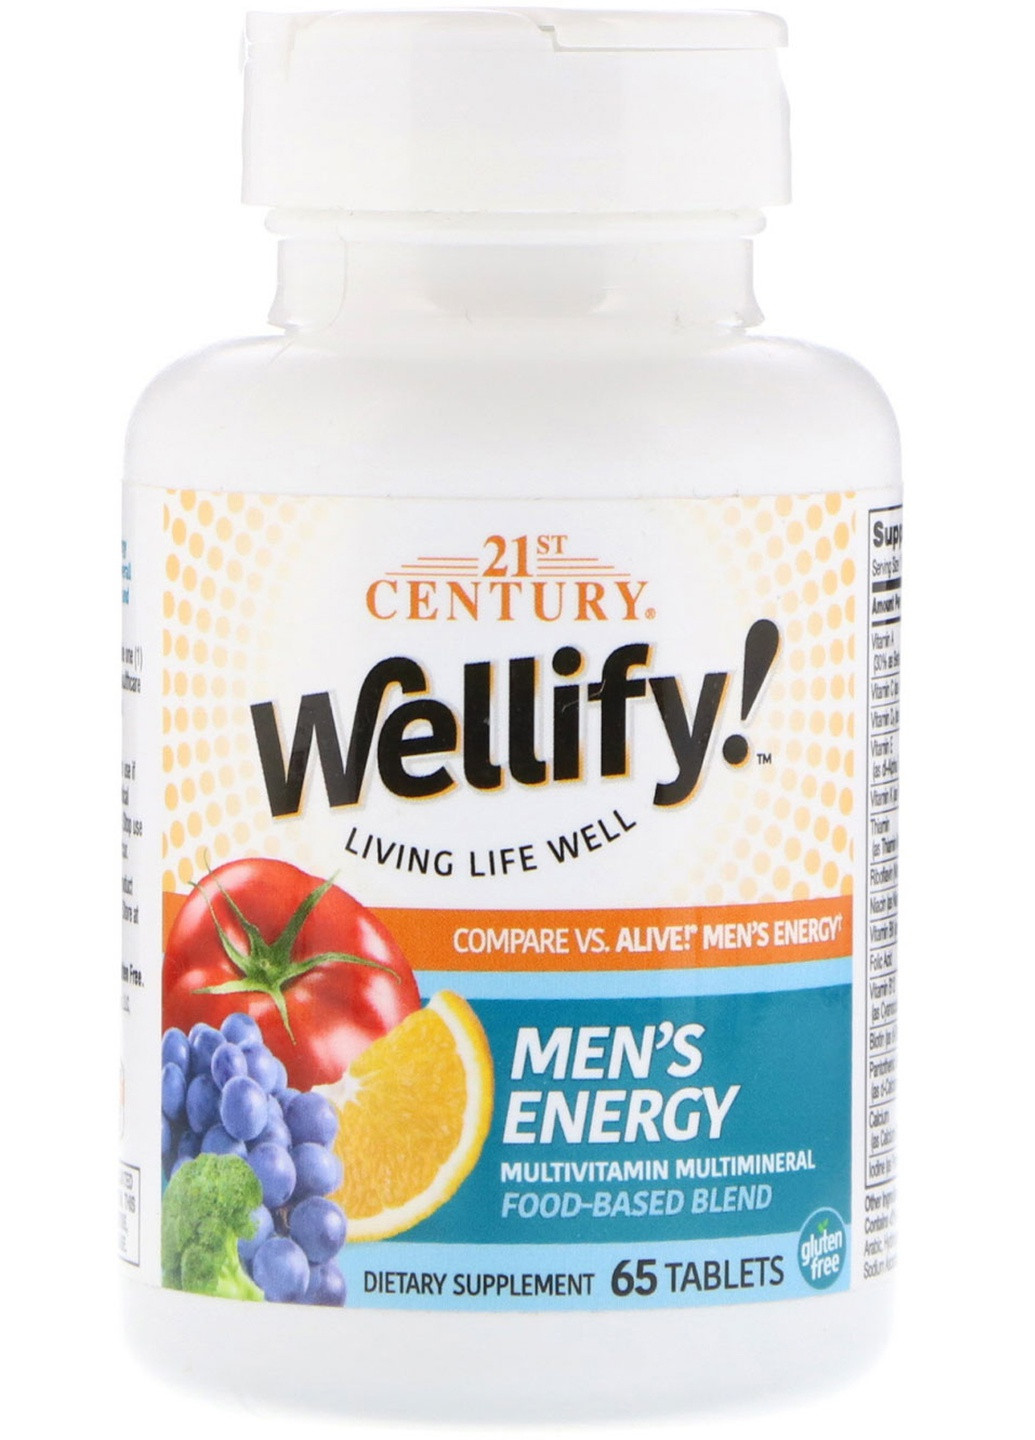 Витамины для мужчин Wellify! Men's Energy, Multivitamin Multimineral, 65 Tablets 21st Century (254325667)